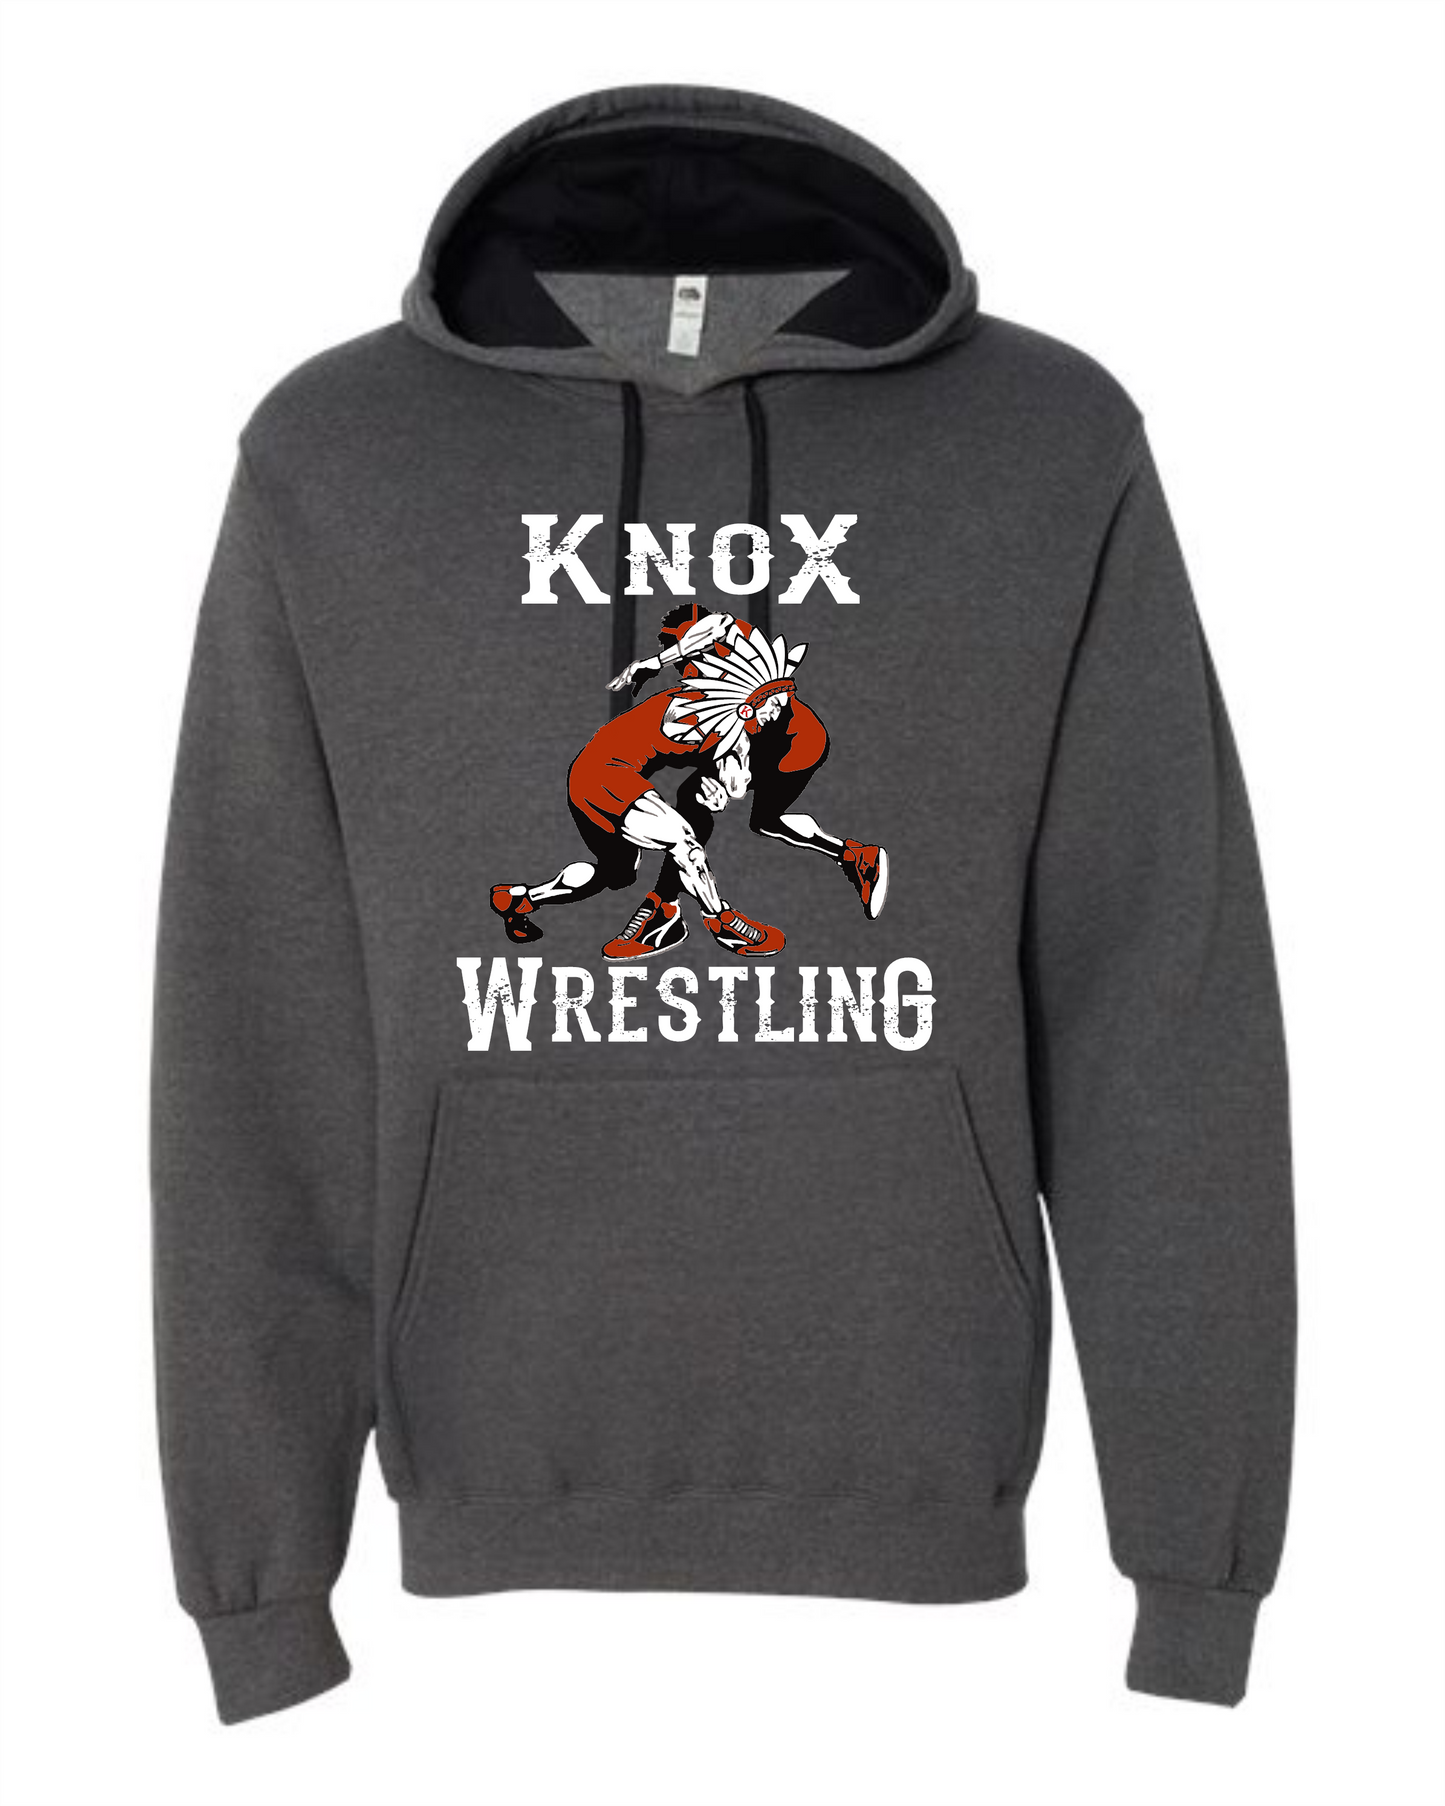 Knox Redskins Wrestling Hoodie - Dark Heather Grey - Adult and Youth Sizes